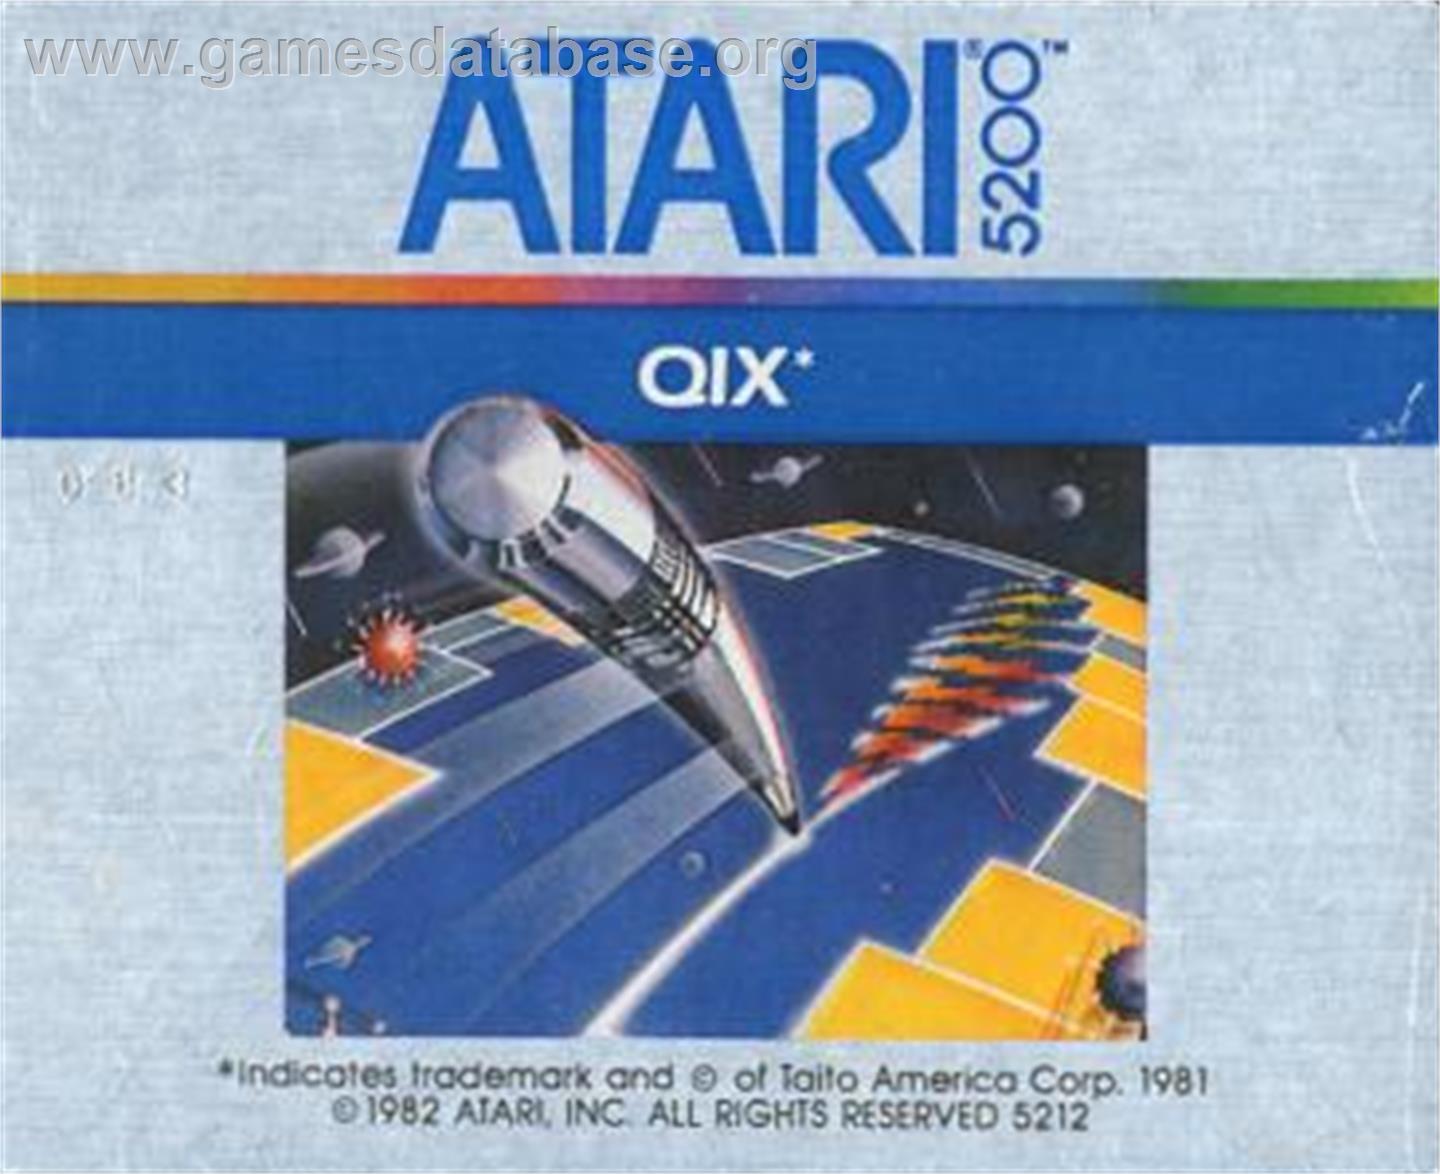 Qix - Atari 5200 - Artwork - Cartridge Top